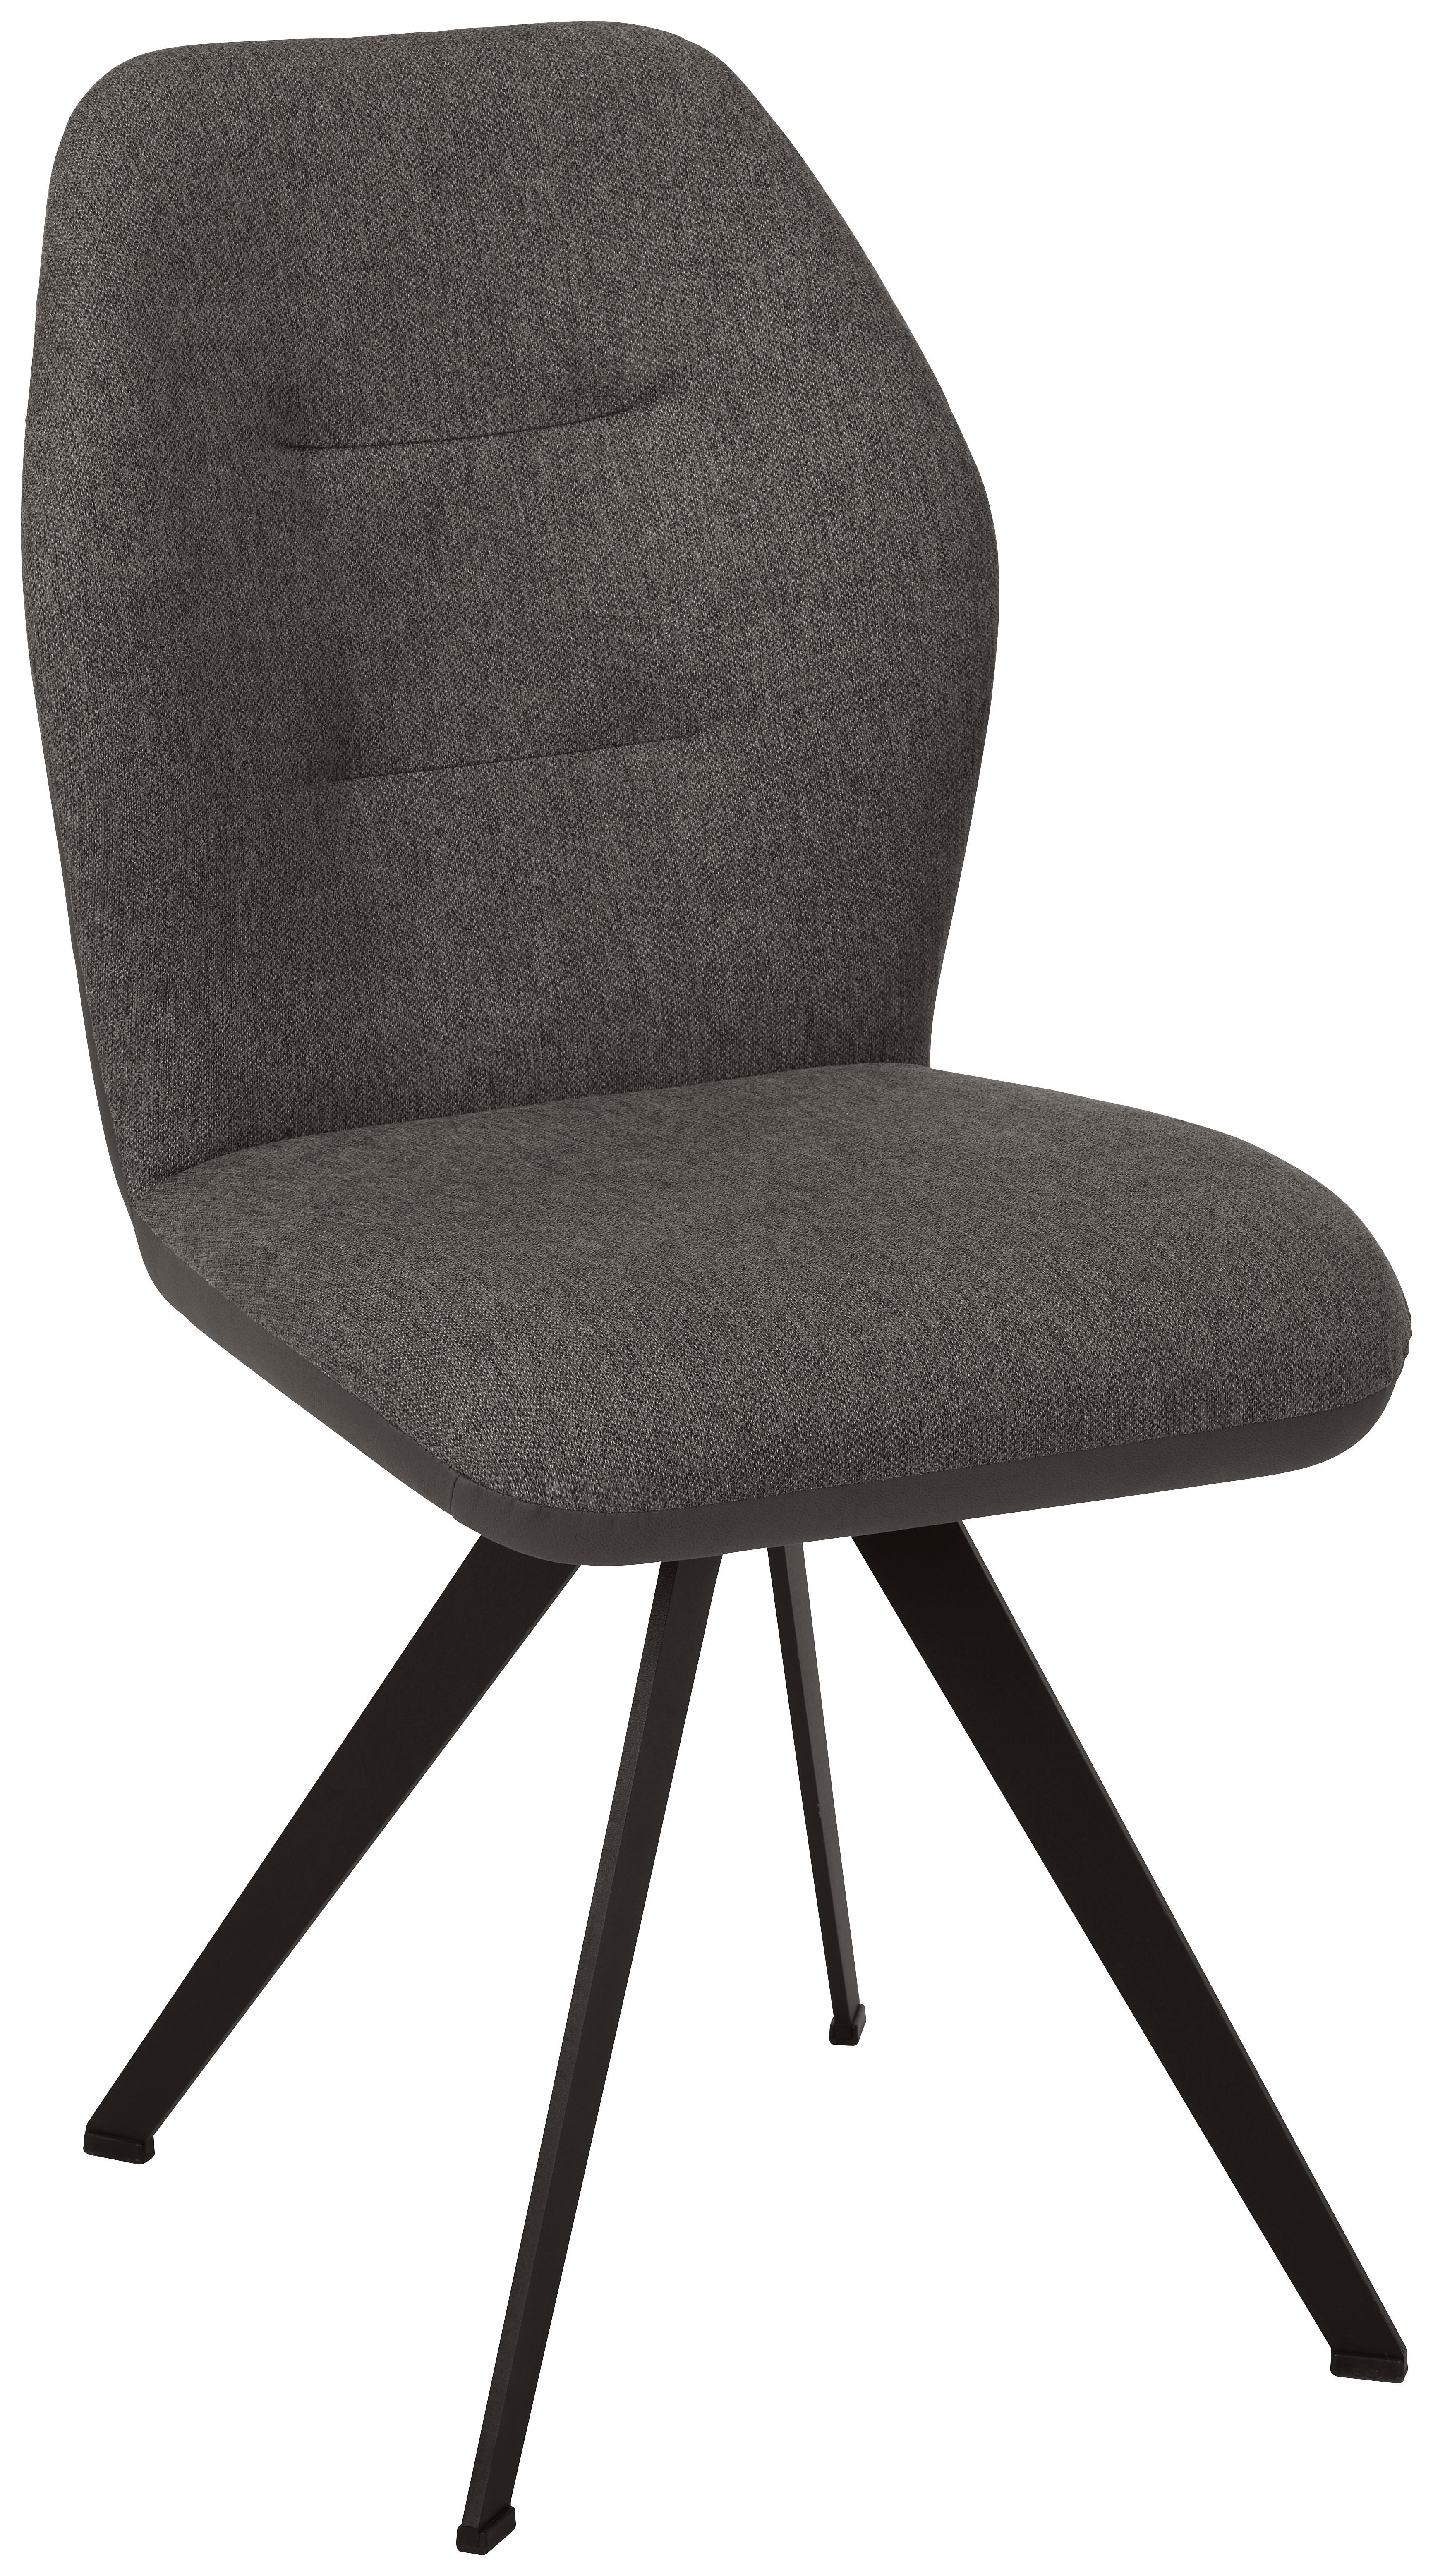 Stuhl in Dunkelgrau - Dunkelgrau/Schwarz, MODERN, Textil/Metall (48/63/96,5cm) - Premium Living